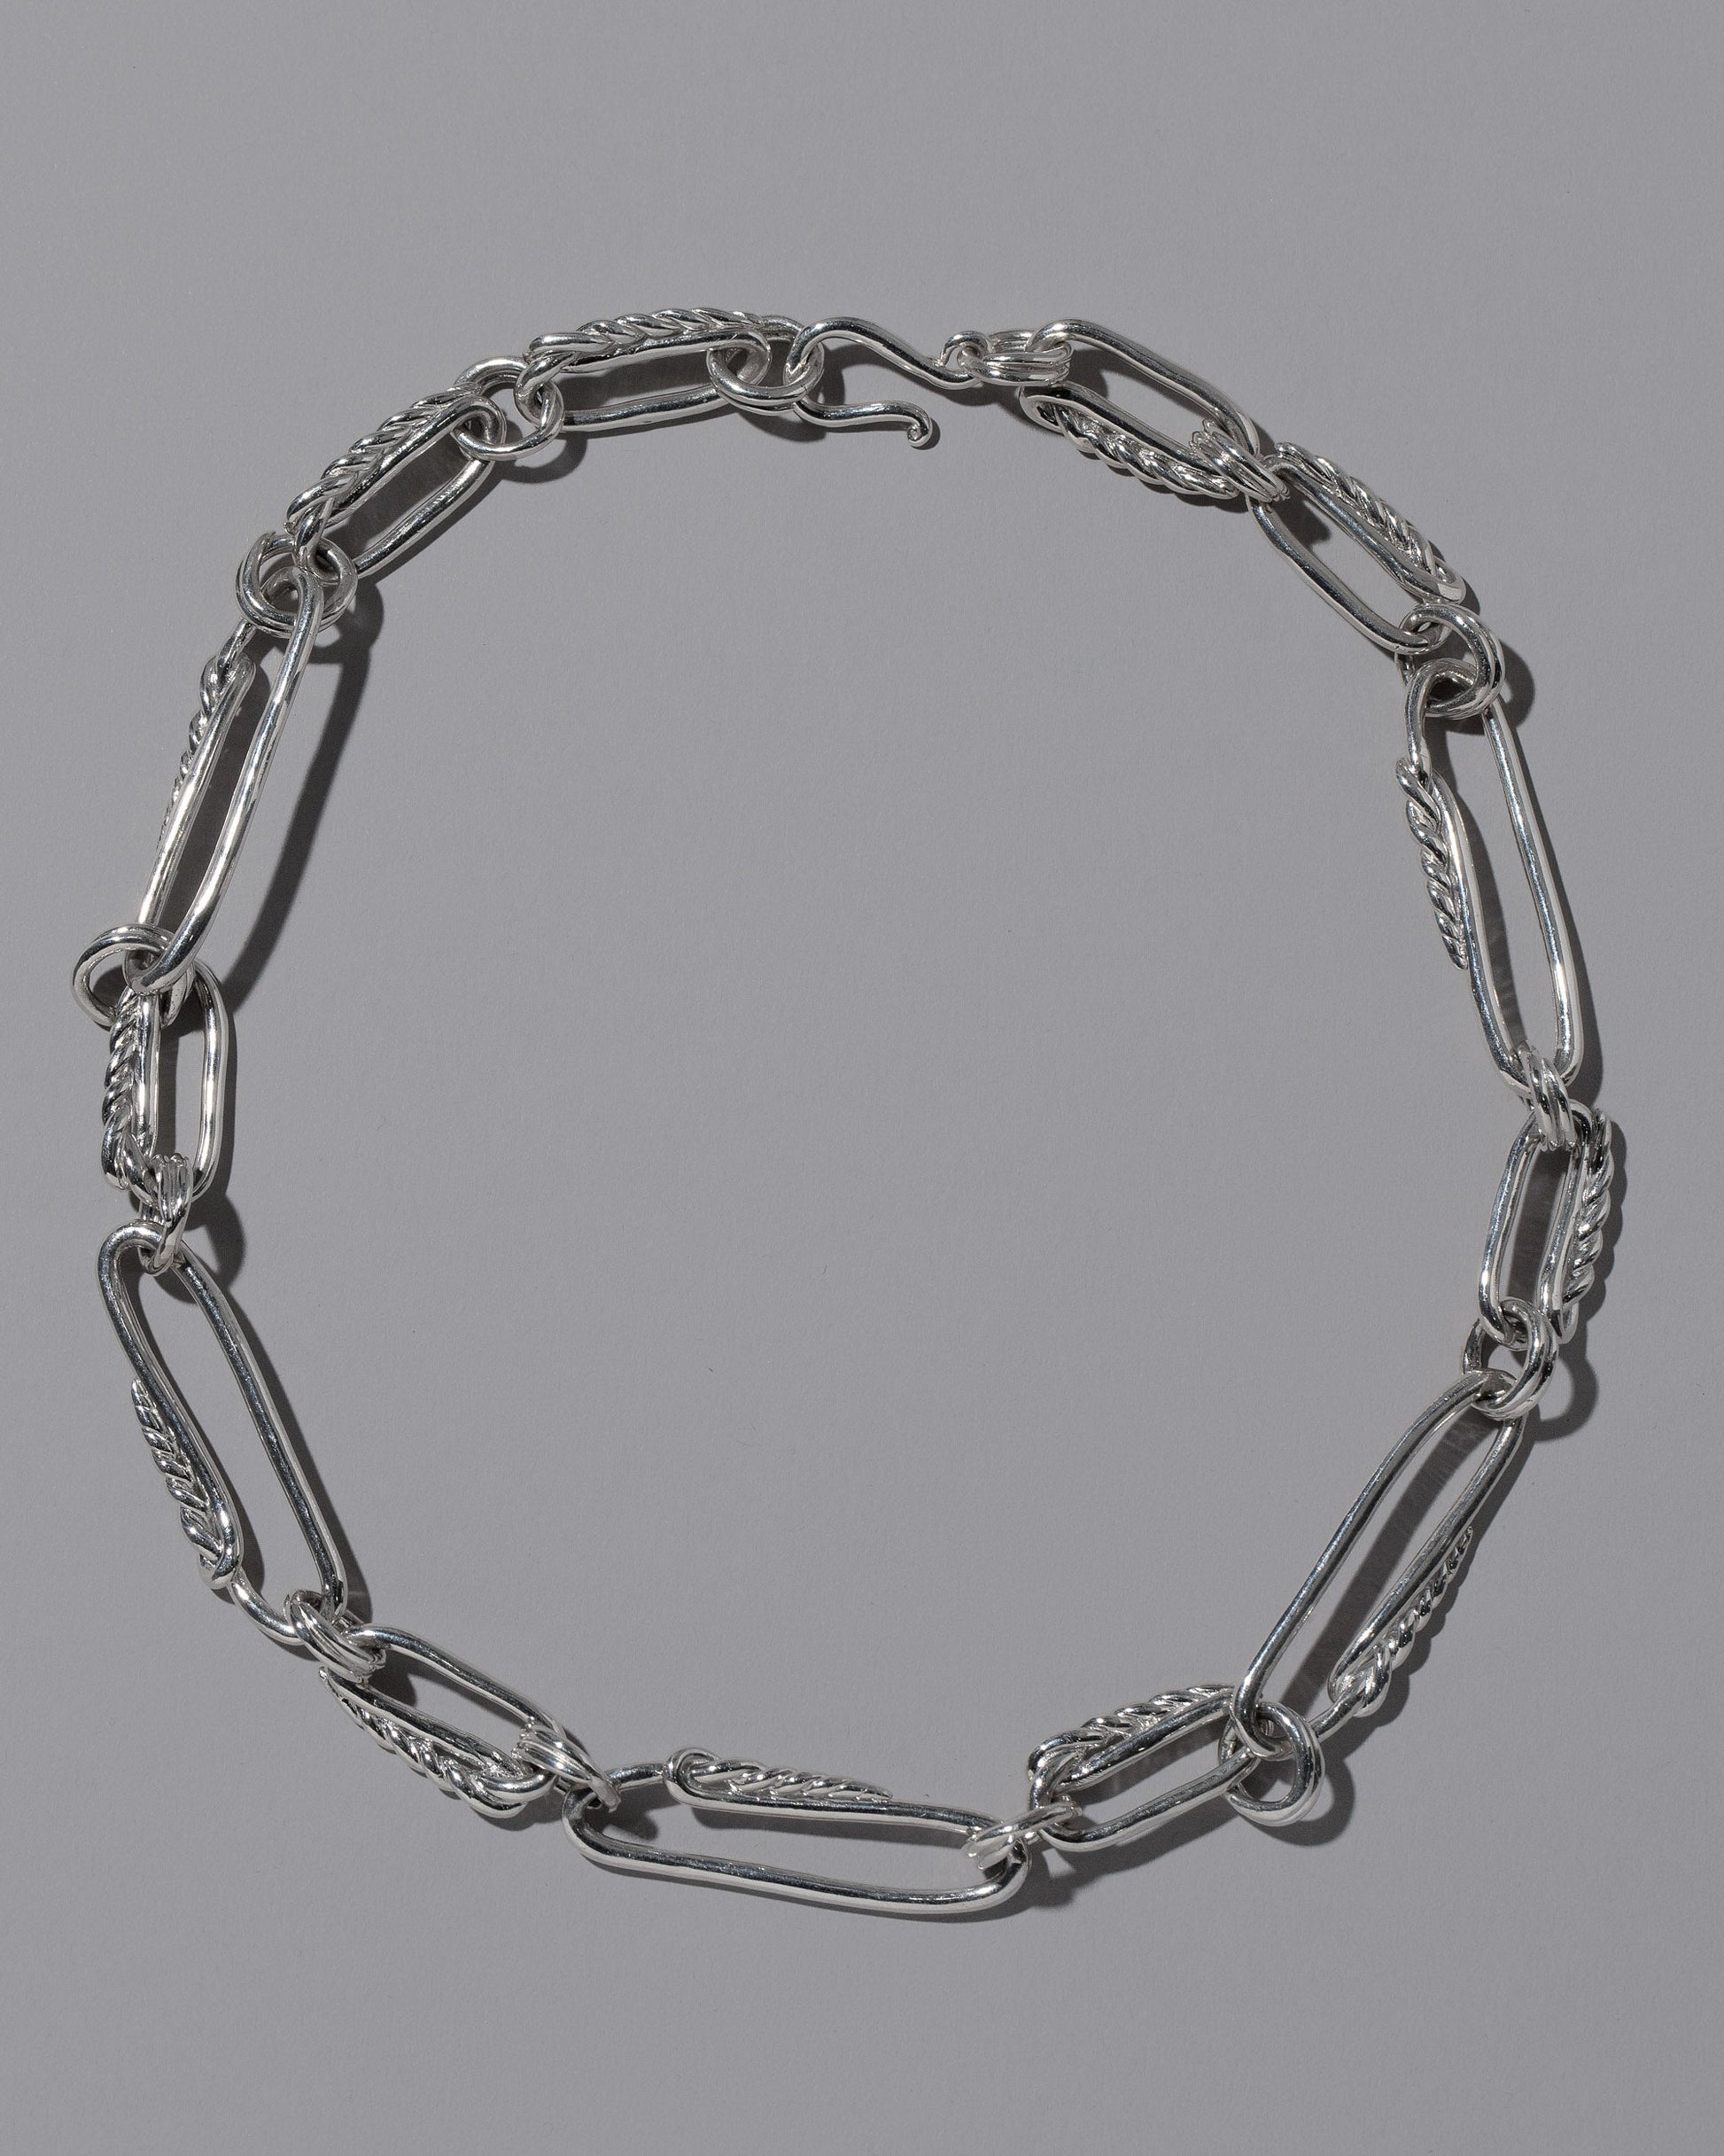 CRZM Sterling Silver Ophiolite Necklace on light color background.